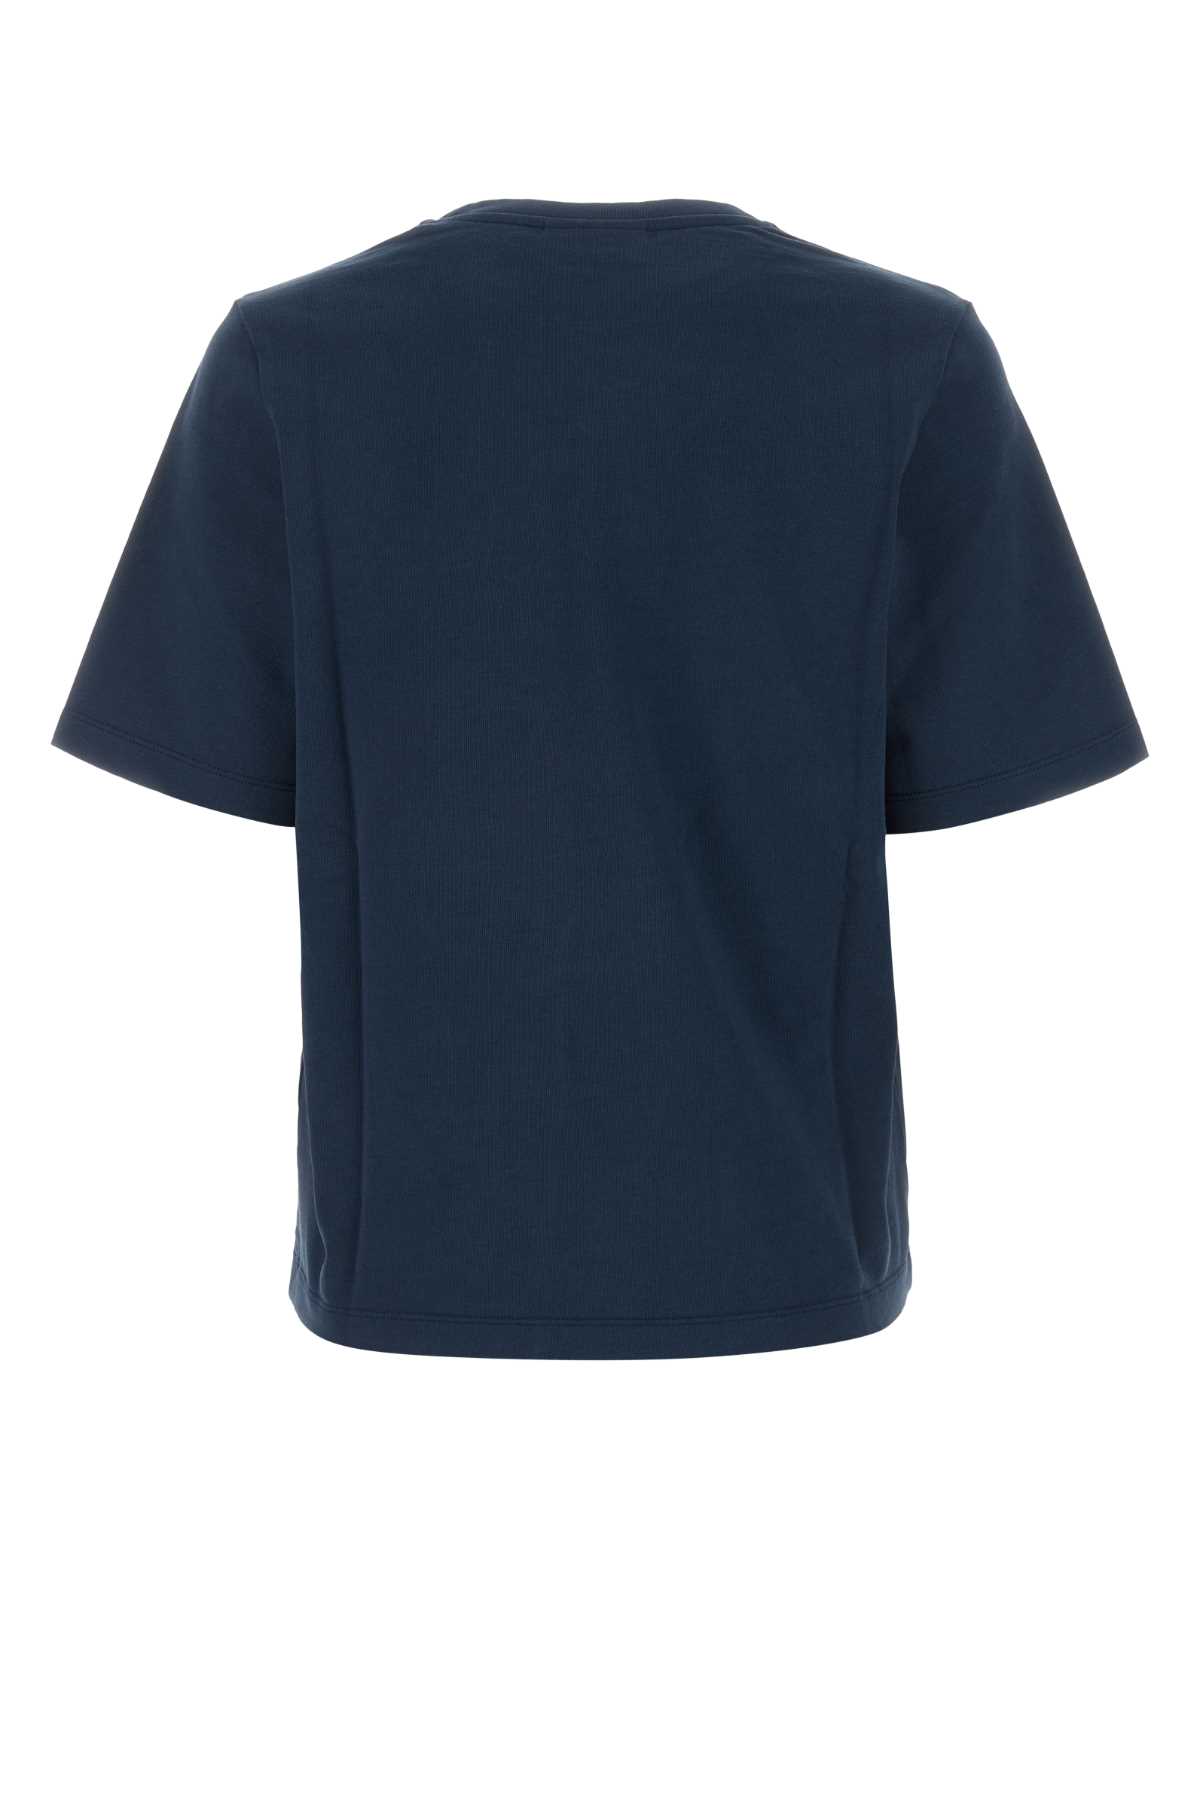 Maison Kitsuné Navy Blue Cotton T-shirt In Ink Blue